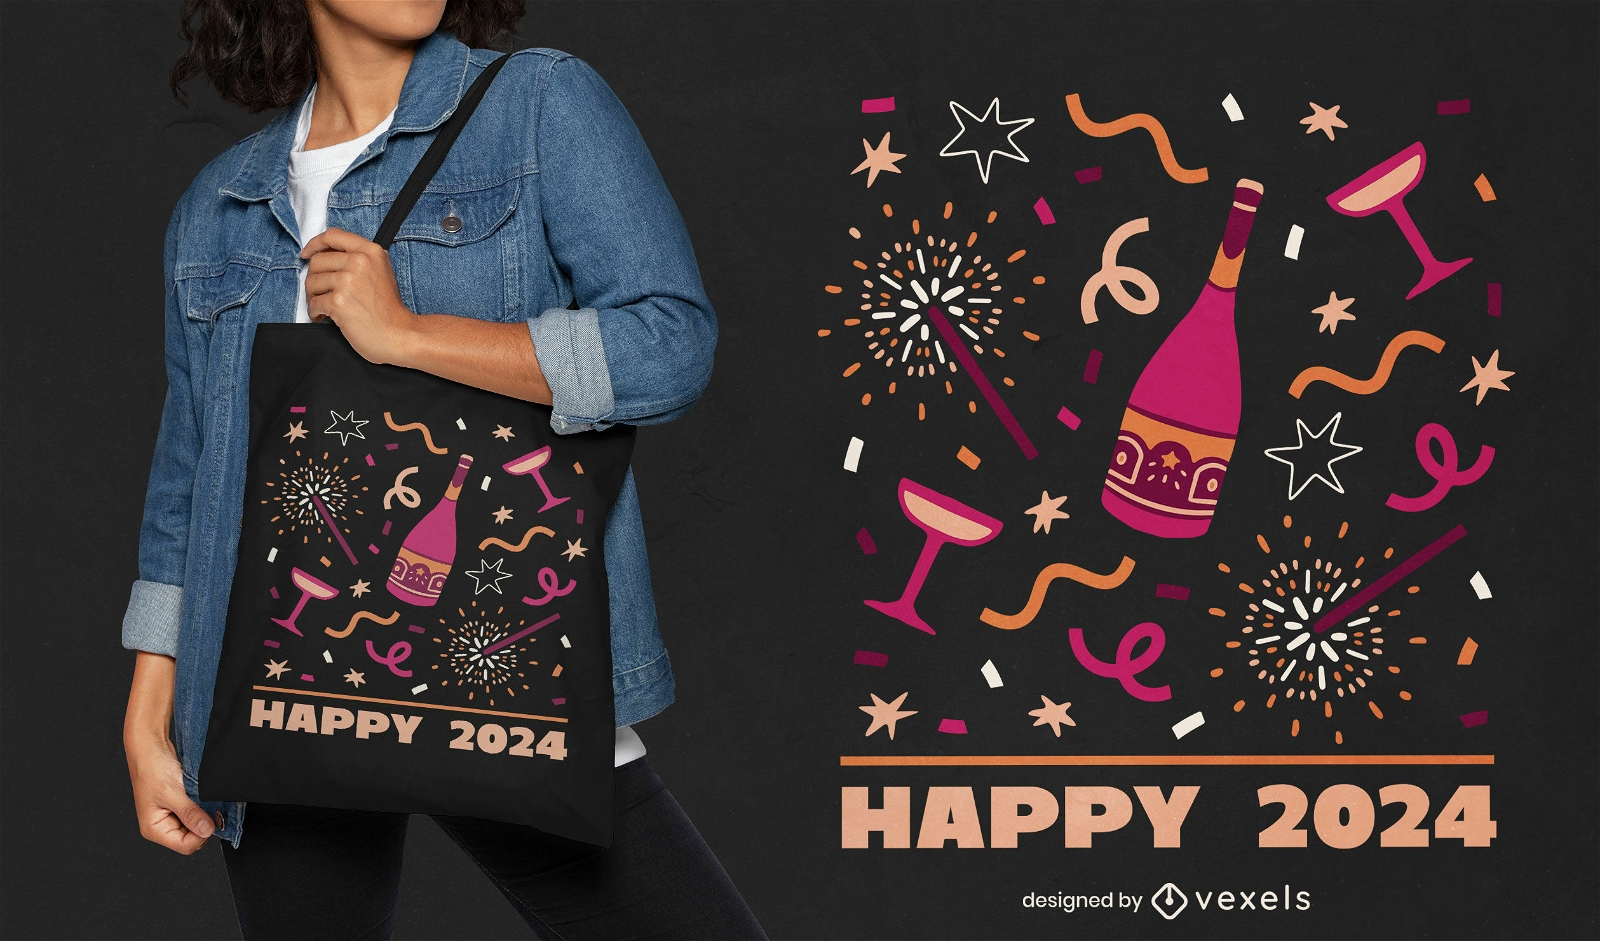 Festive new year tote bag design